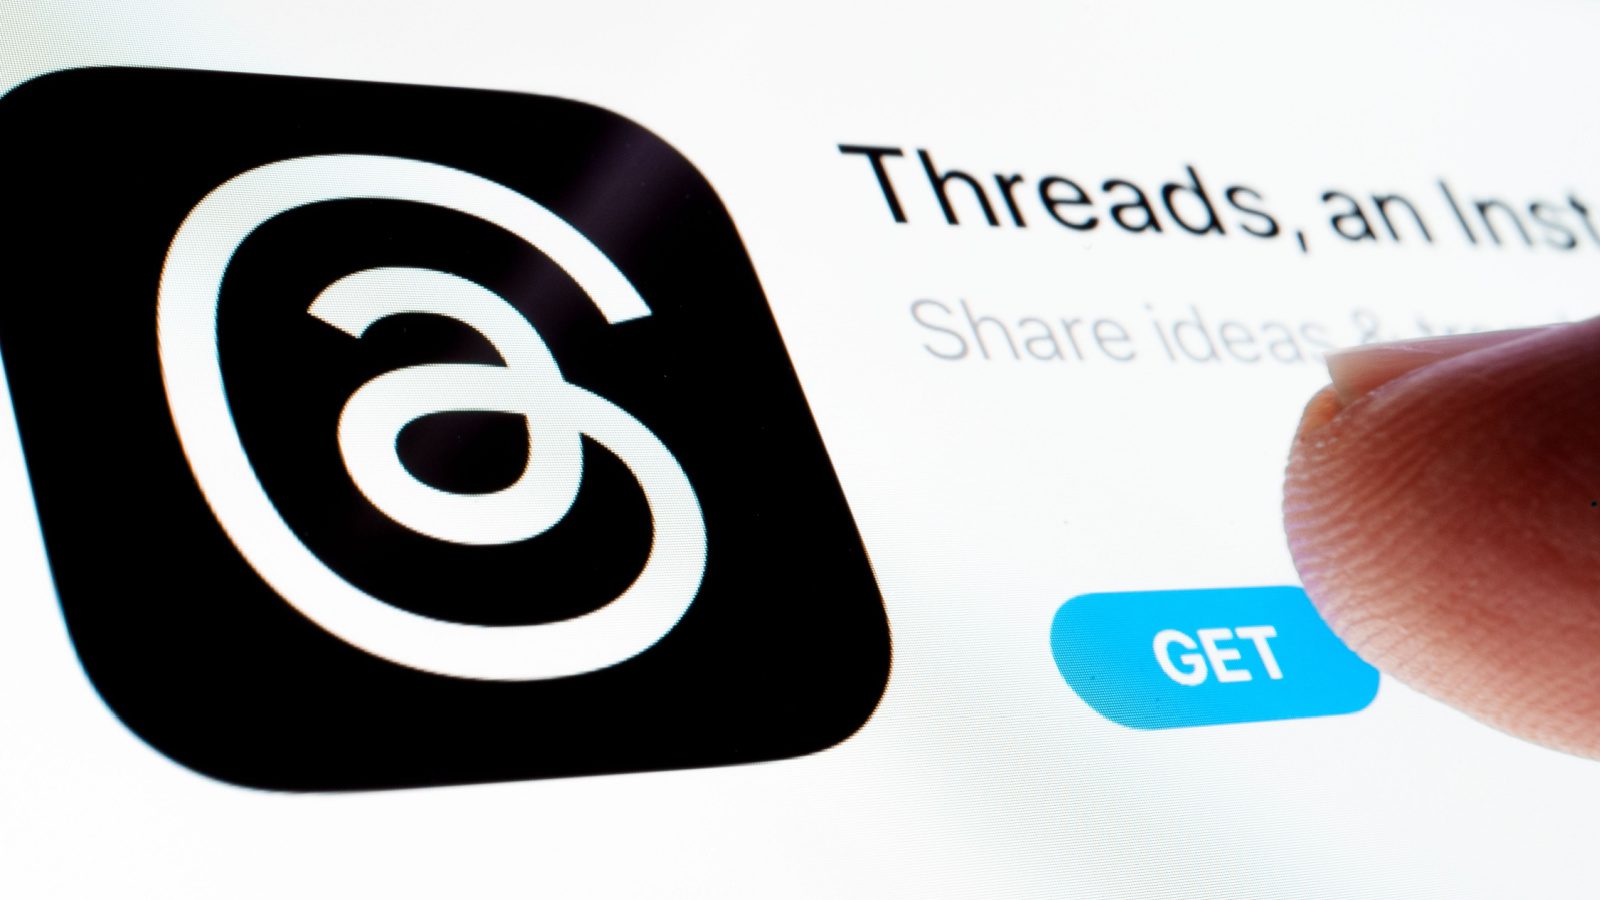 Meta's Threads Platform a Direct Challenge to Twitter